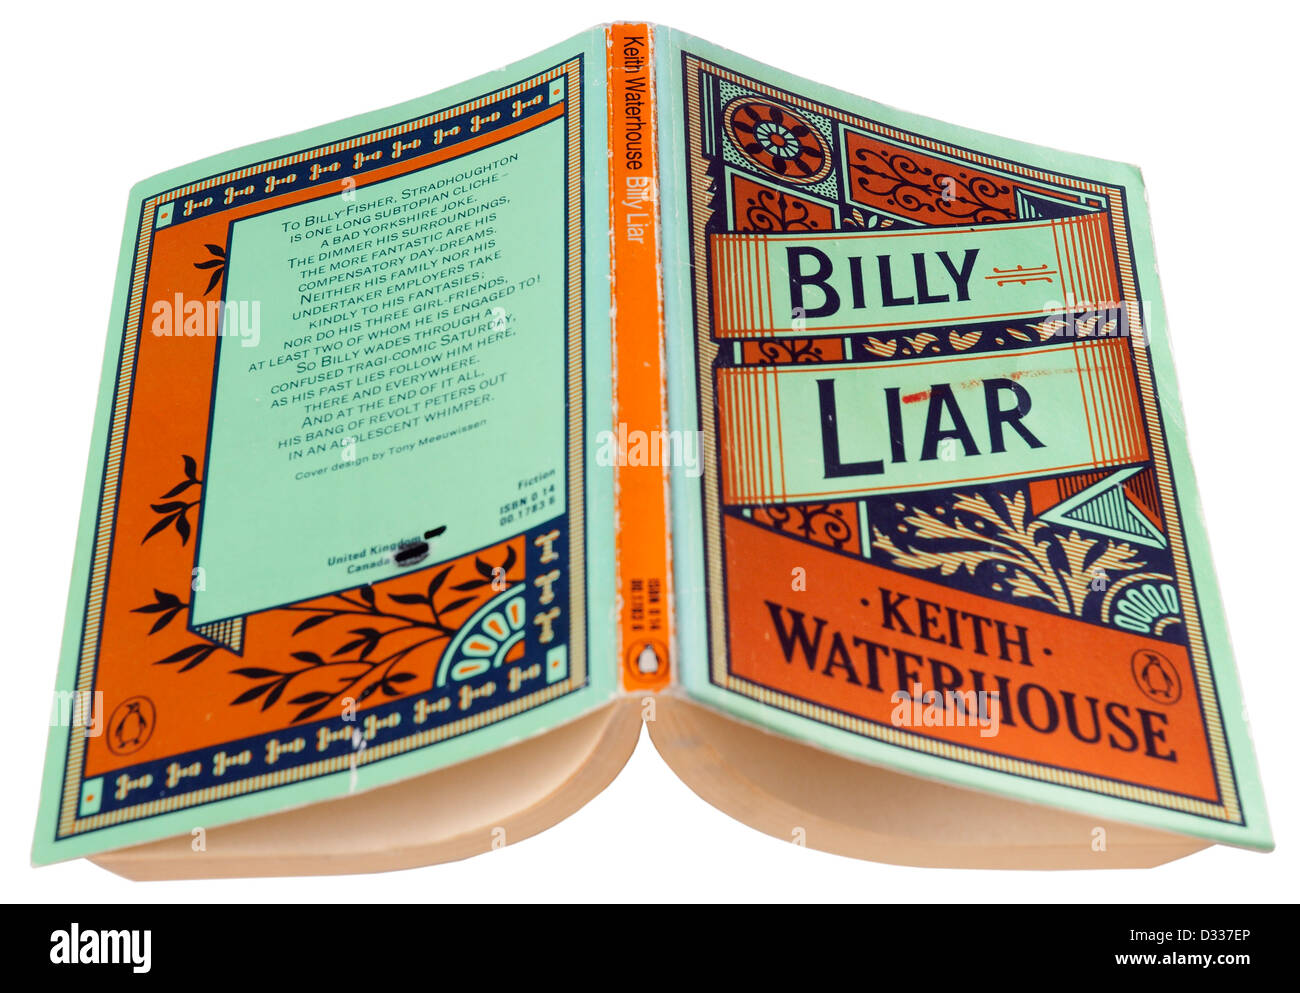 Billy mentiroso de Keith Waterhouse Foto de stock